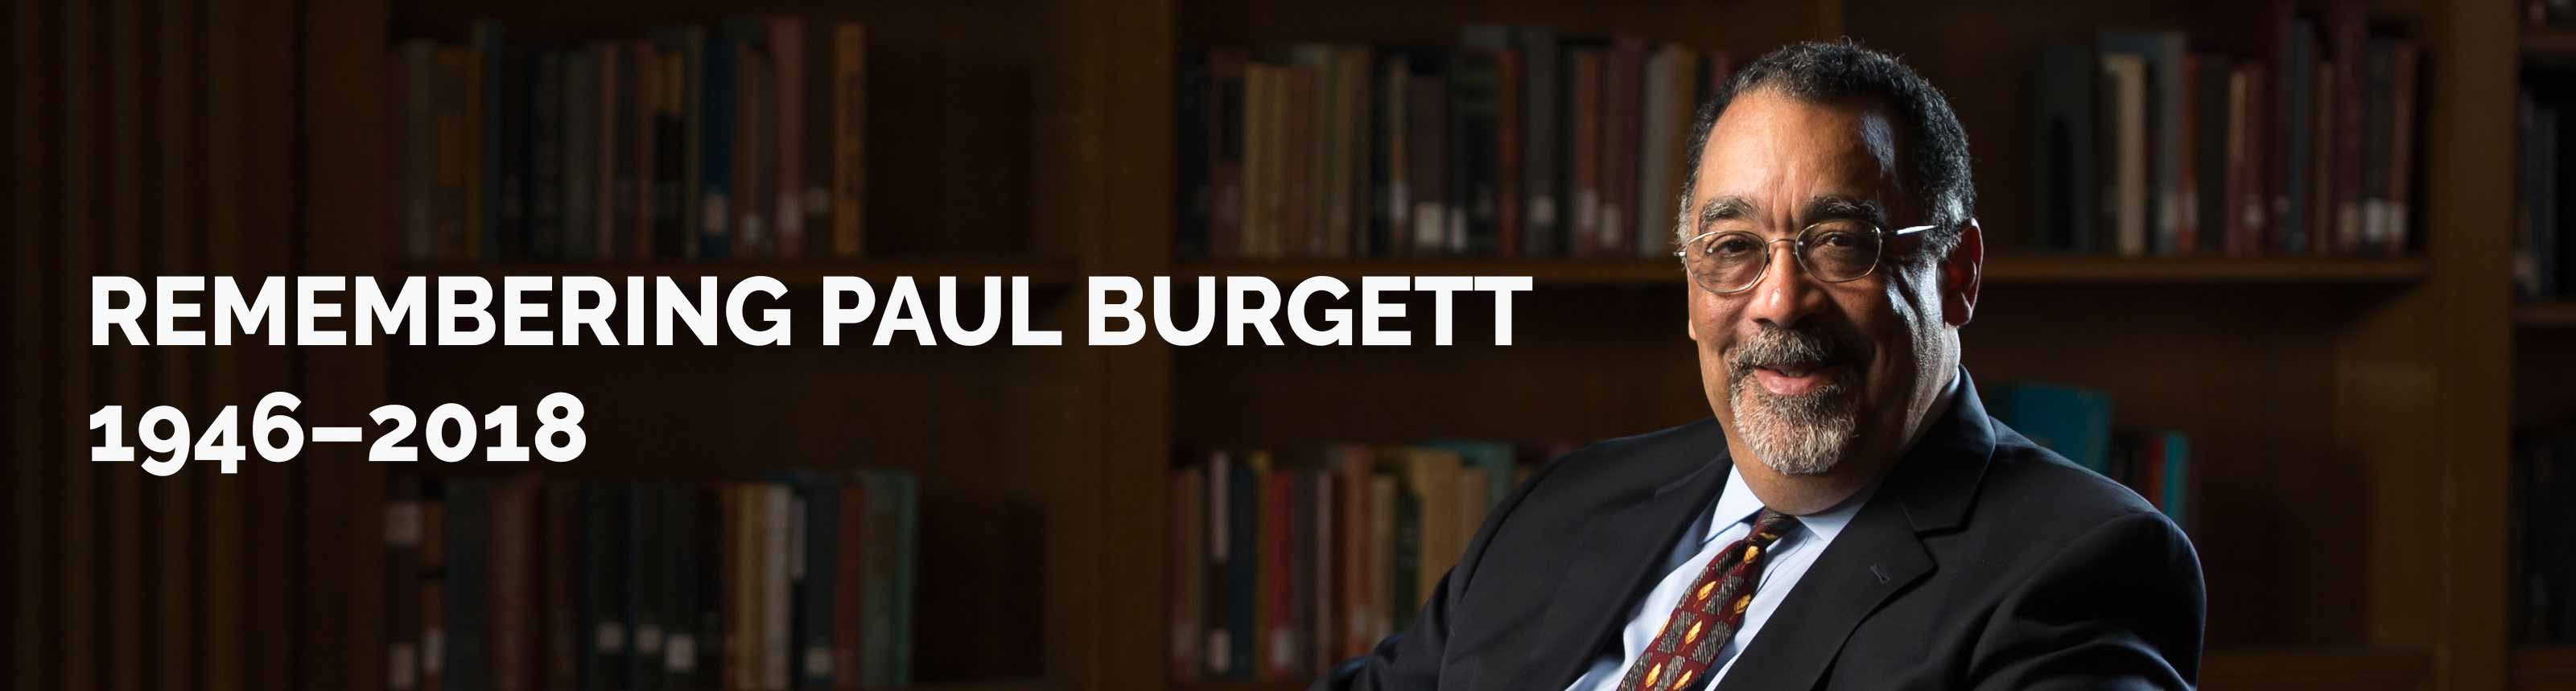 photo of Paul Burgett with the text REMEMBERING PAUL BURGETT